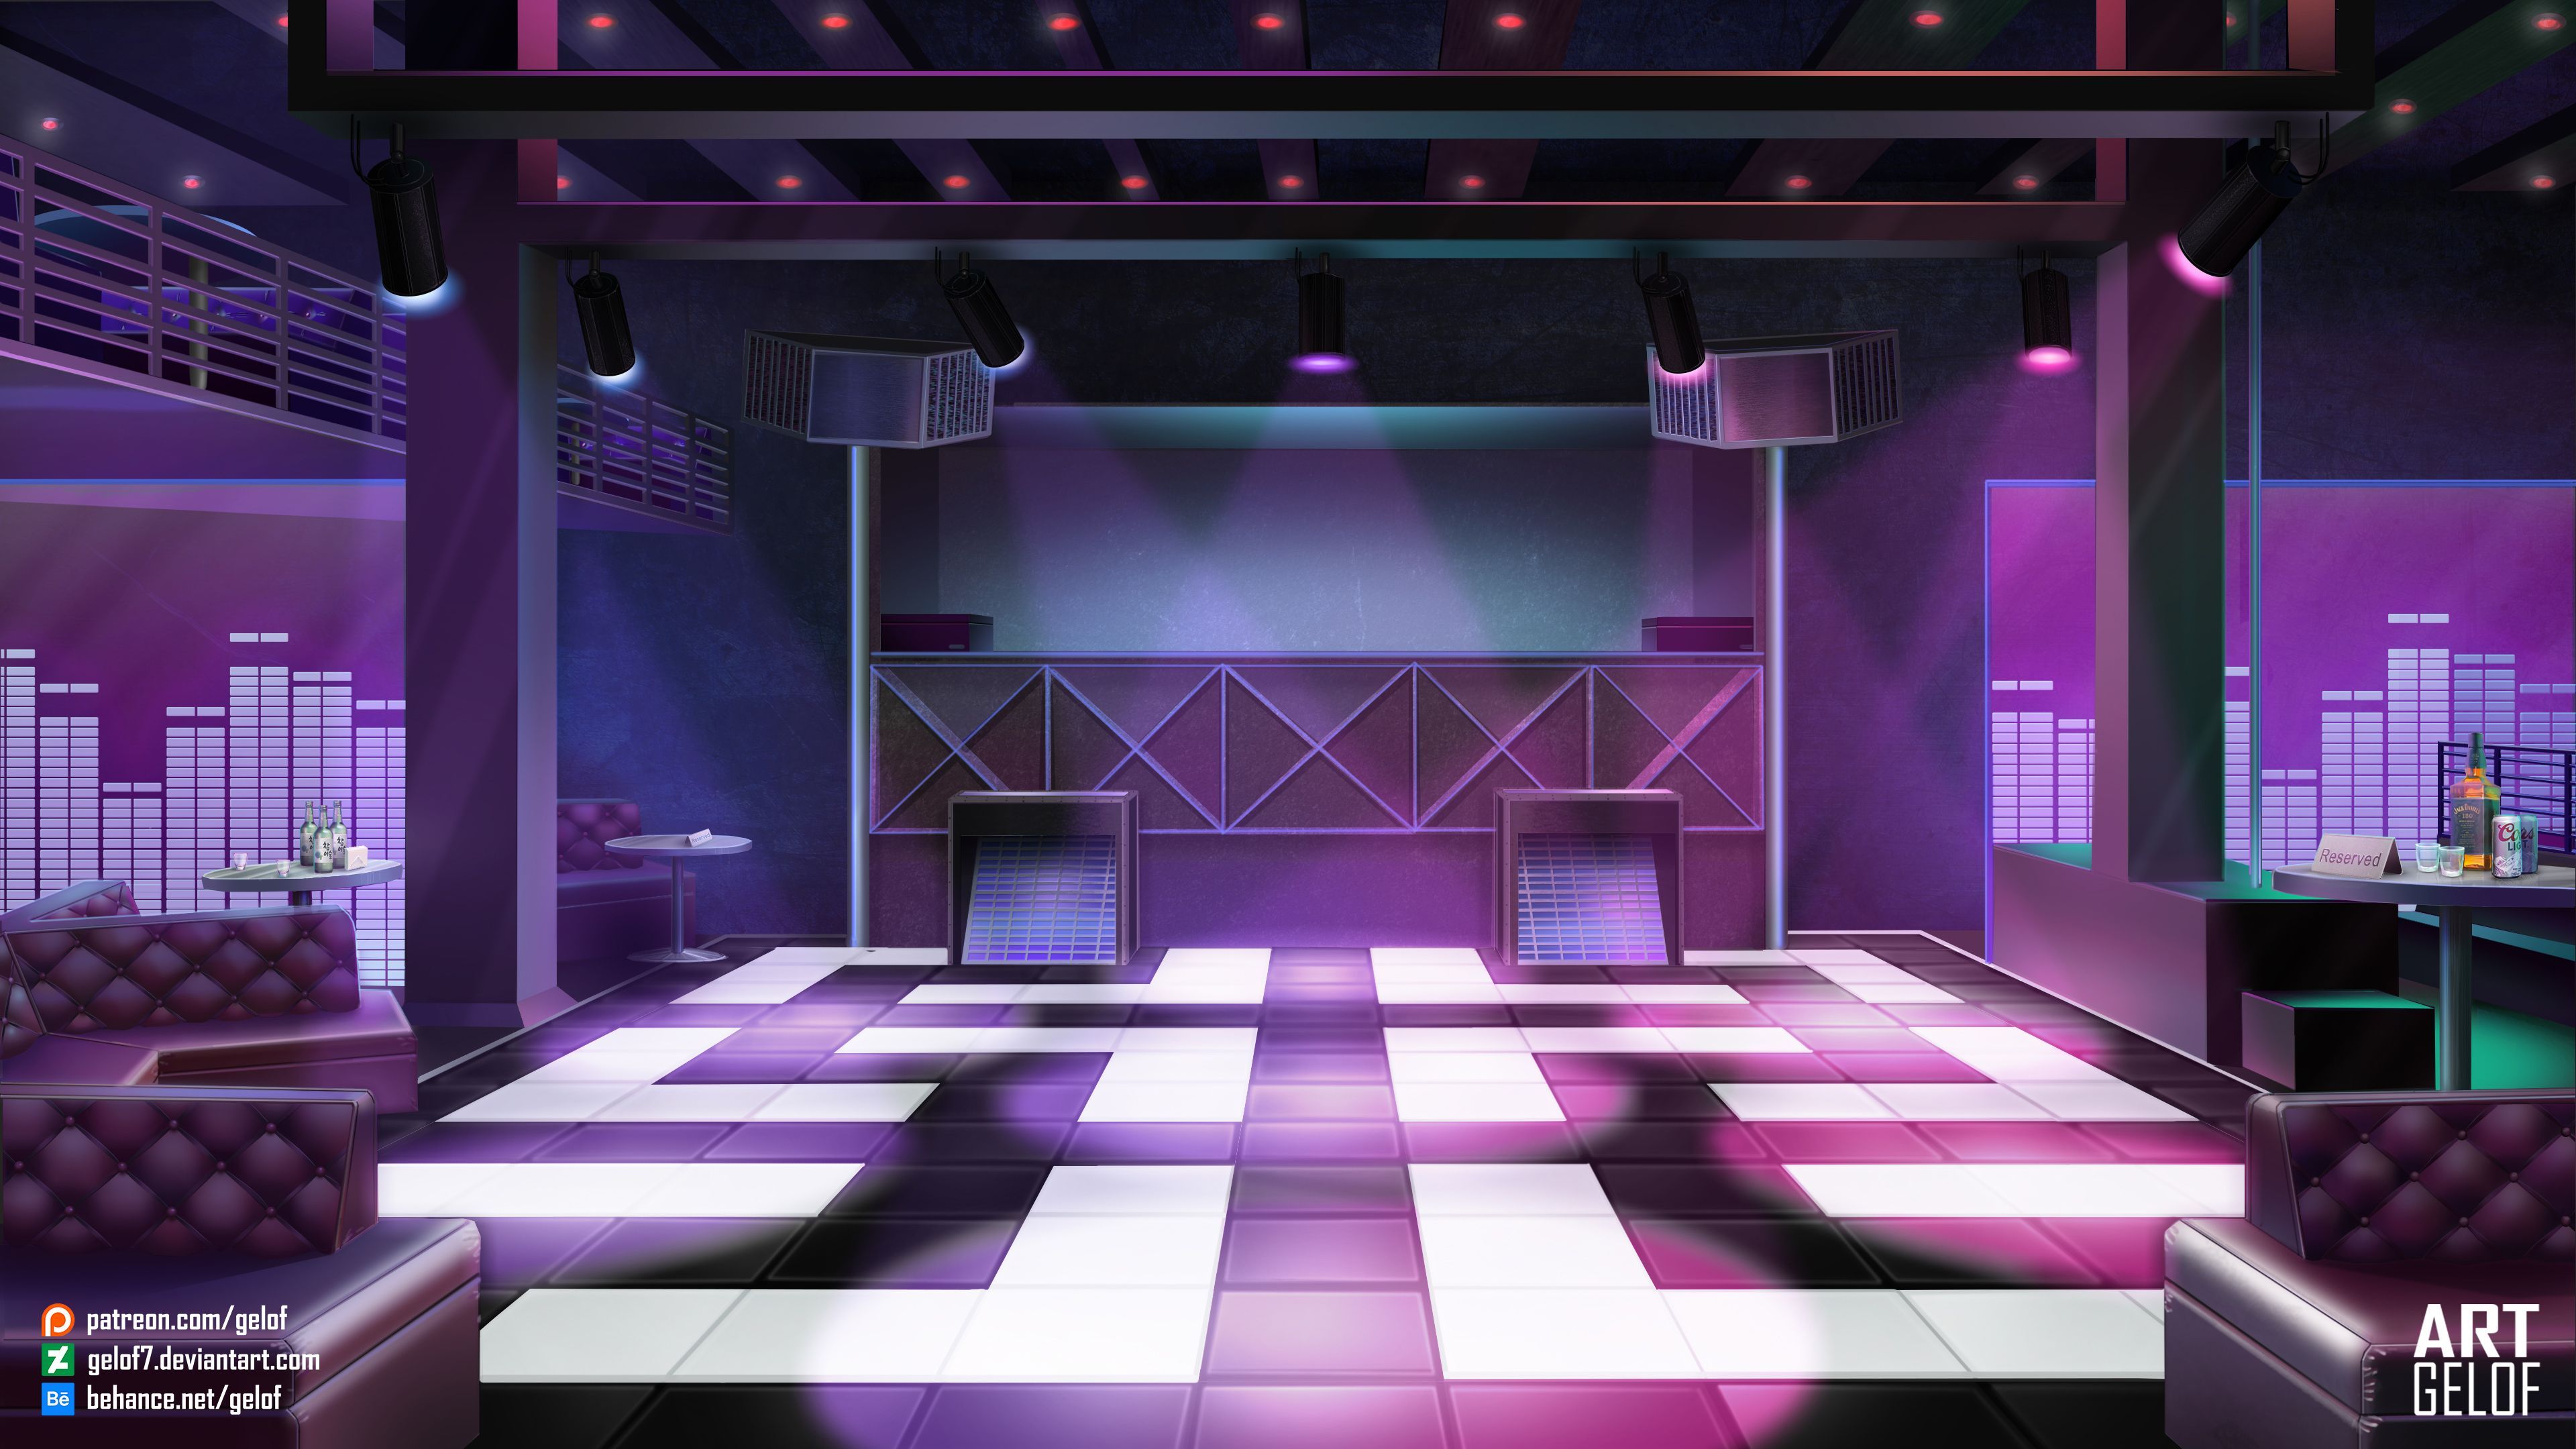 Night club. Background. Episode interactive background, Episode background, Episode background